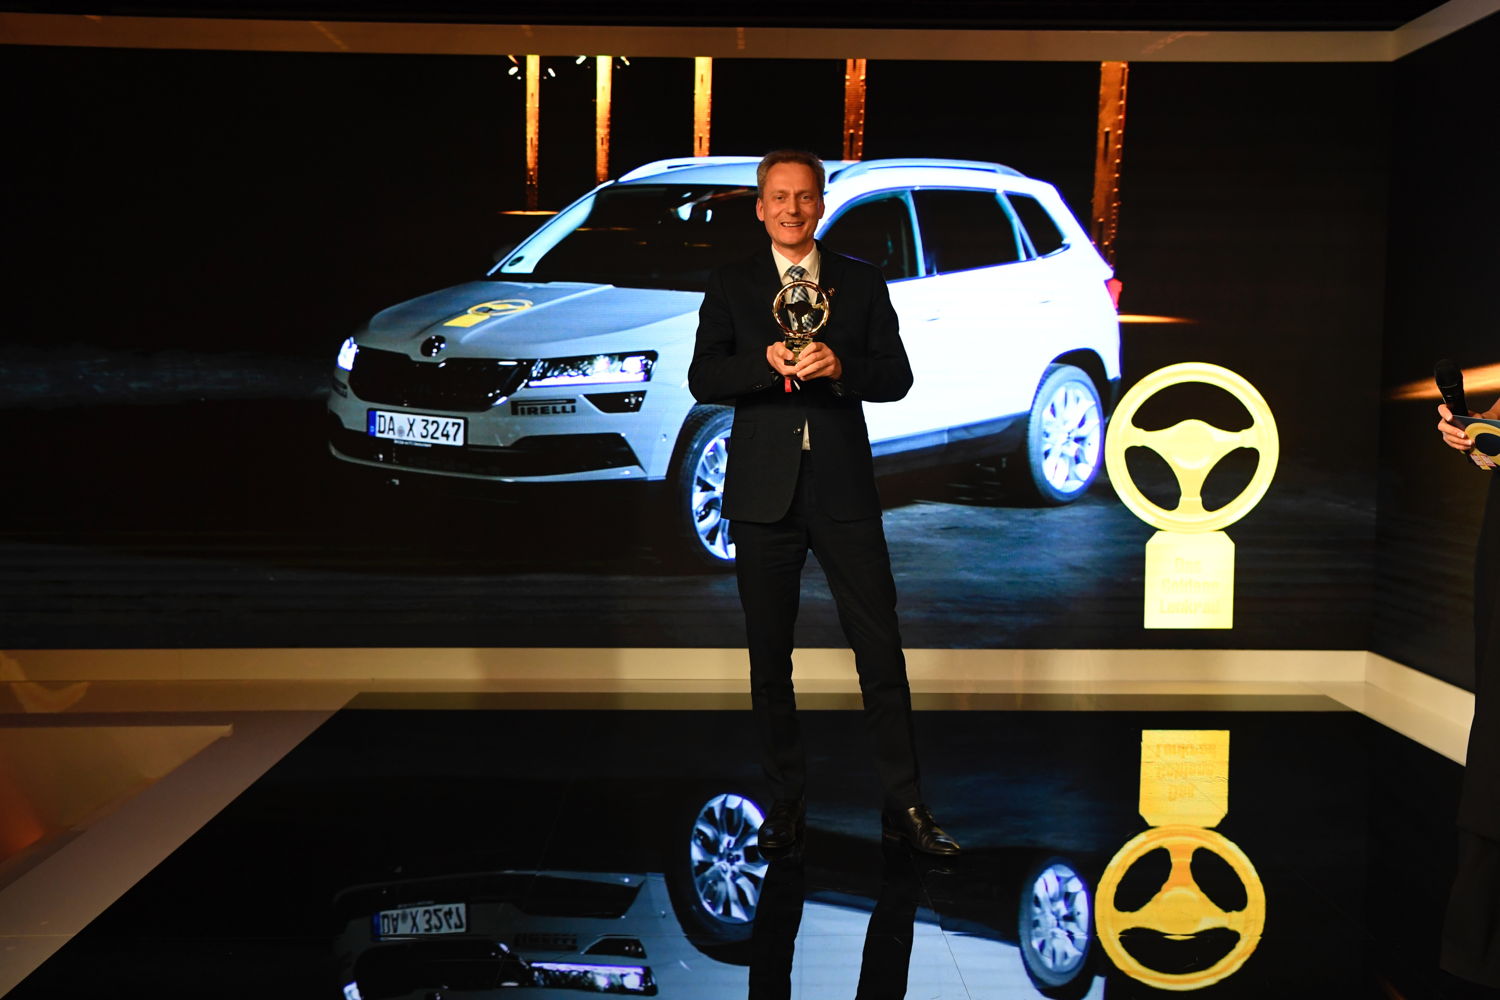 Christian Strube, ŠKODA AUTO Board Member for Technical Development, receives the Golden Steering Wheel for the ŠKODA KAROQ in the 'Small SUV' category.